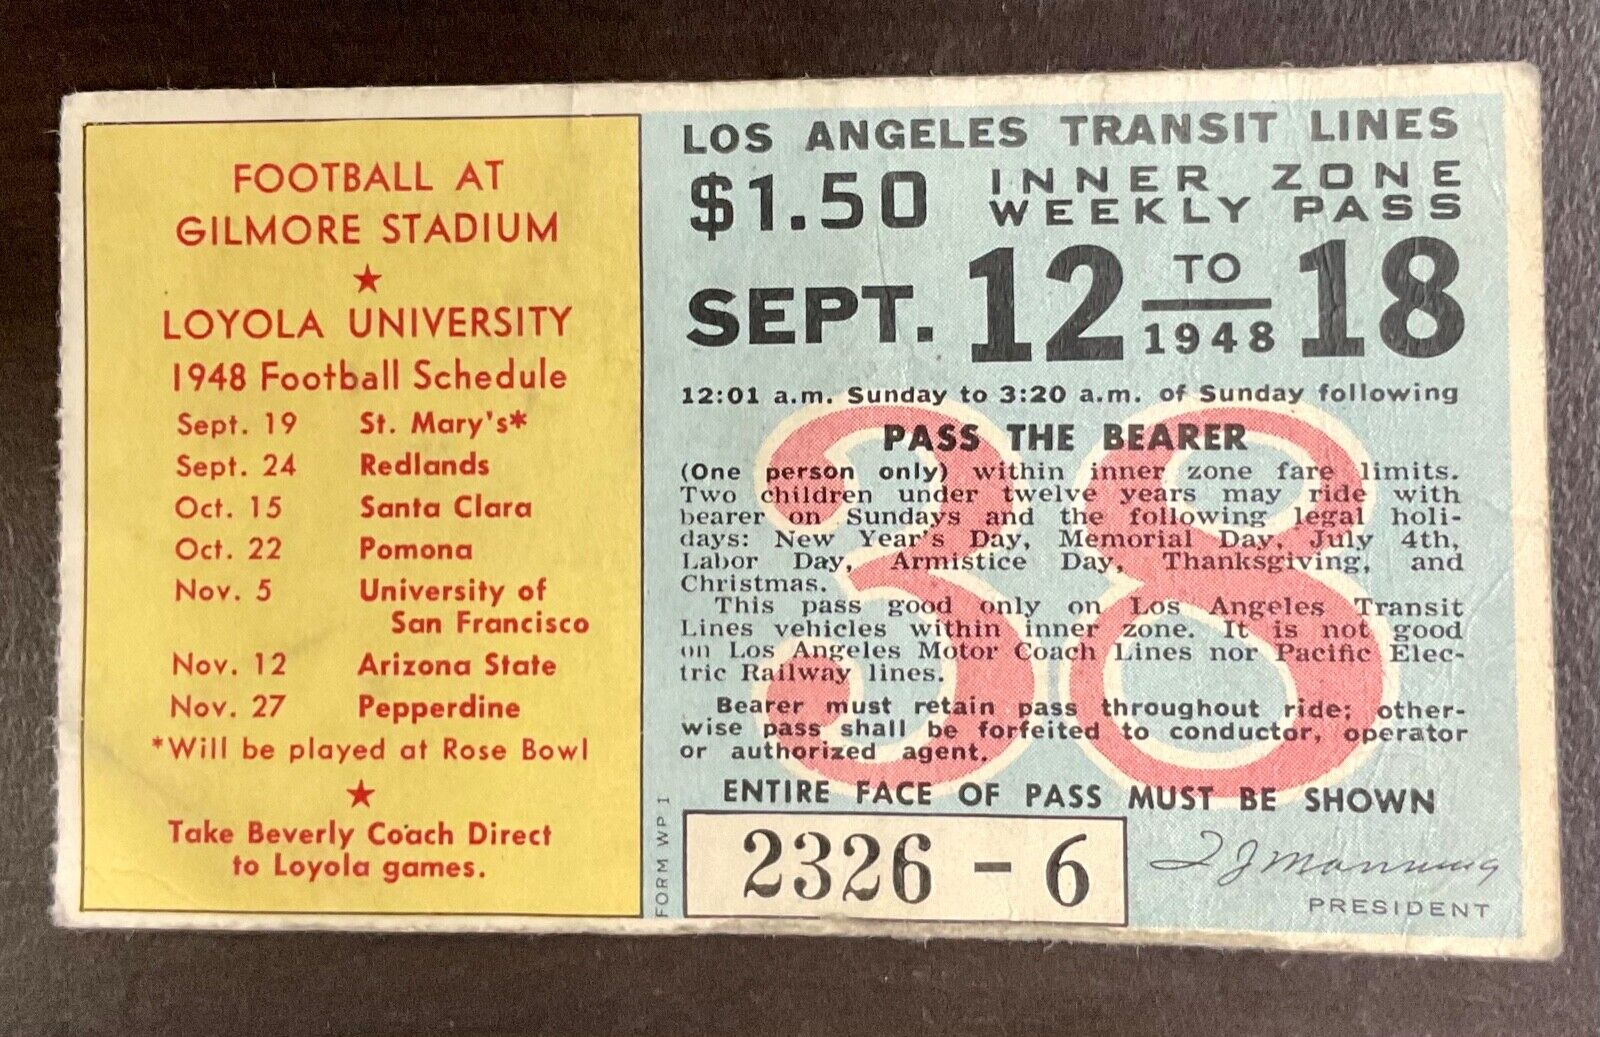 Los Angeles Railway Pass 1948 Loyola (Marymount) University Football Schedule 